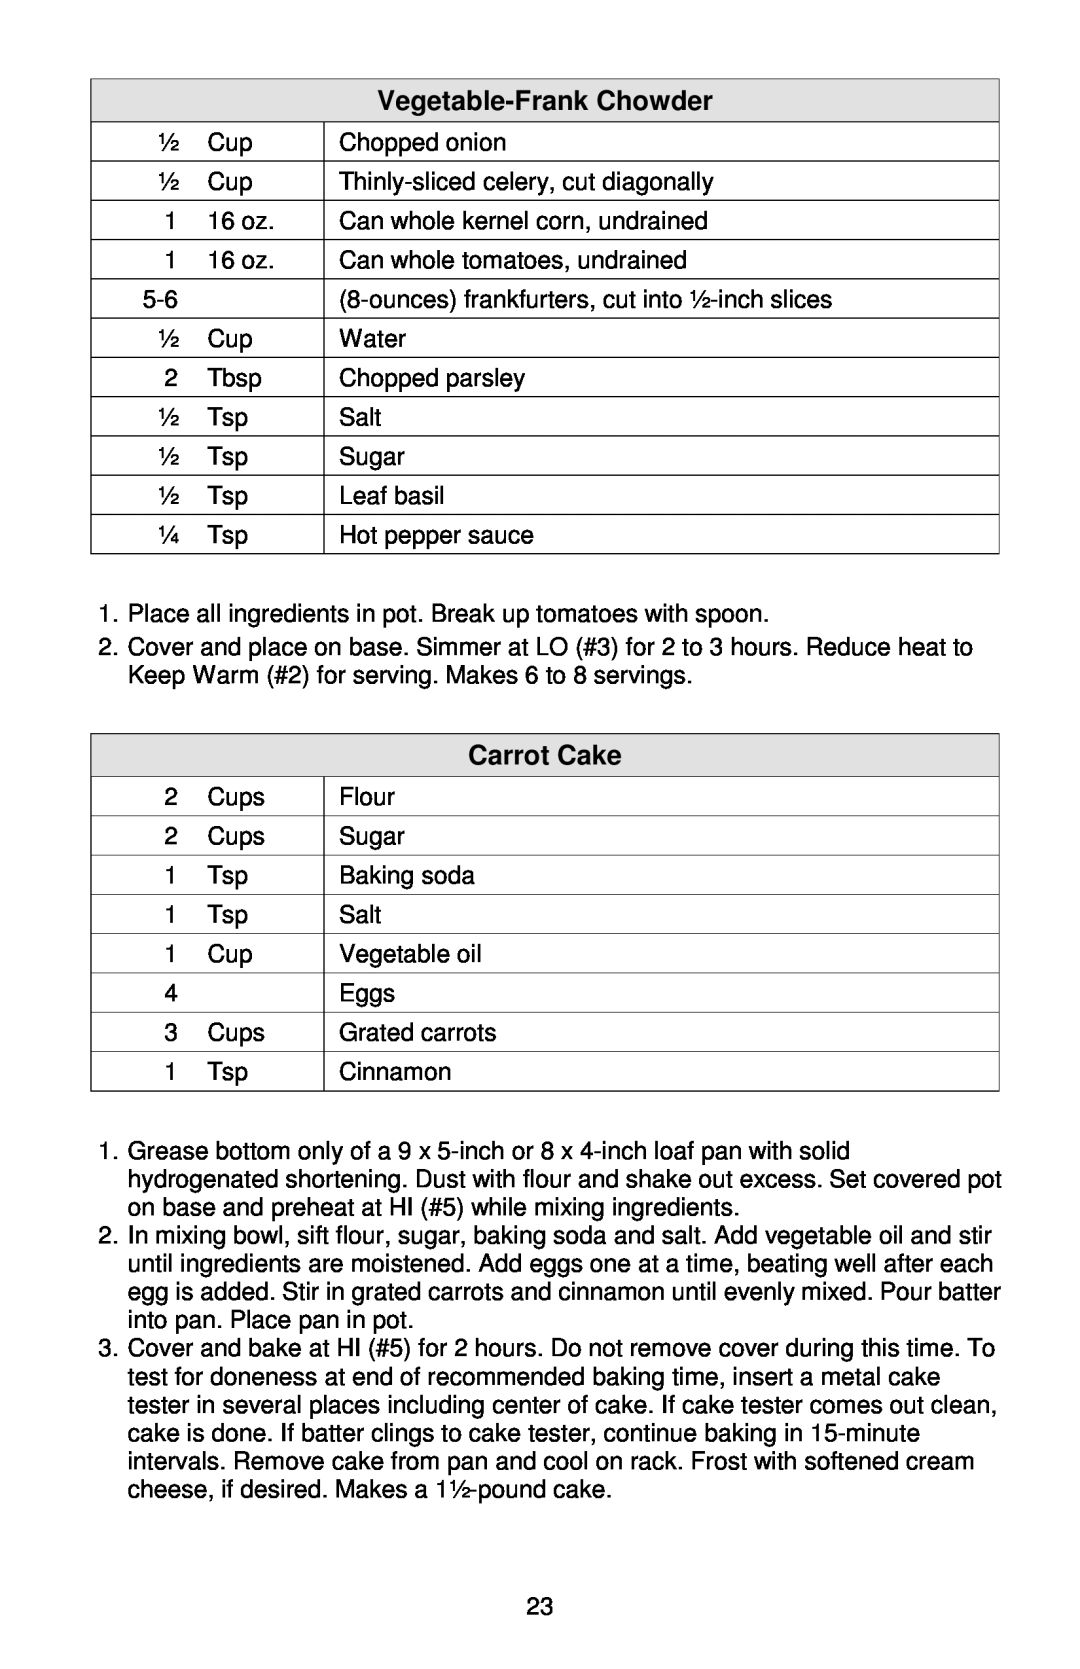 West Bend Cookers instruction manual Vegetable-FrankChowder, Carrot Cake 